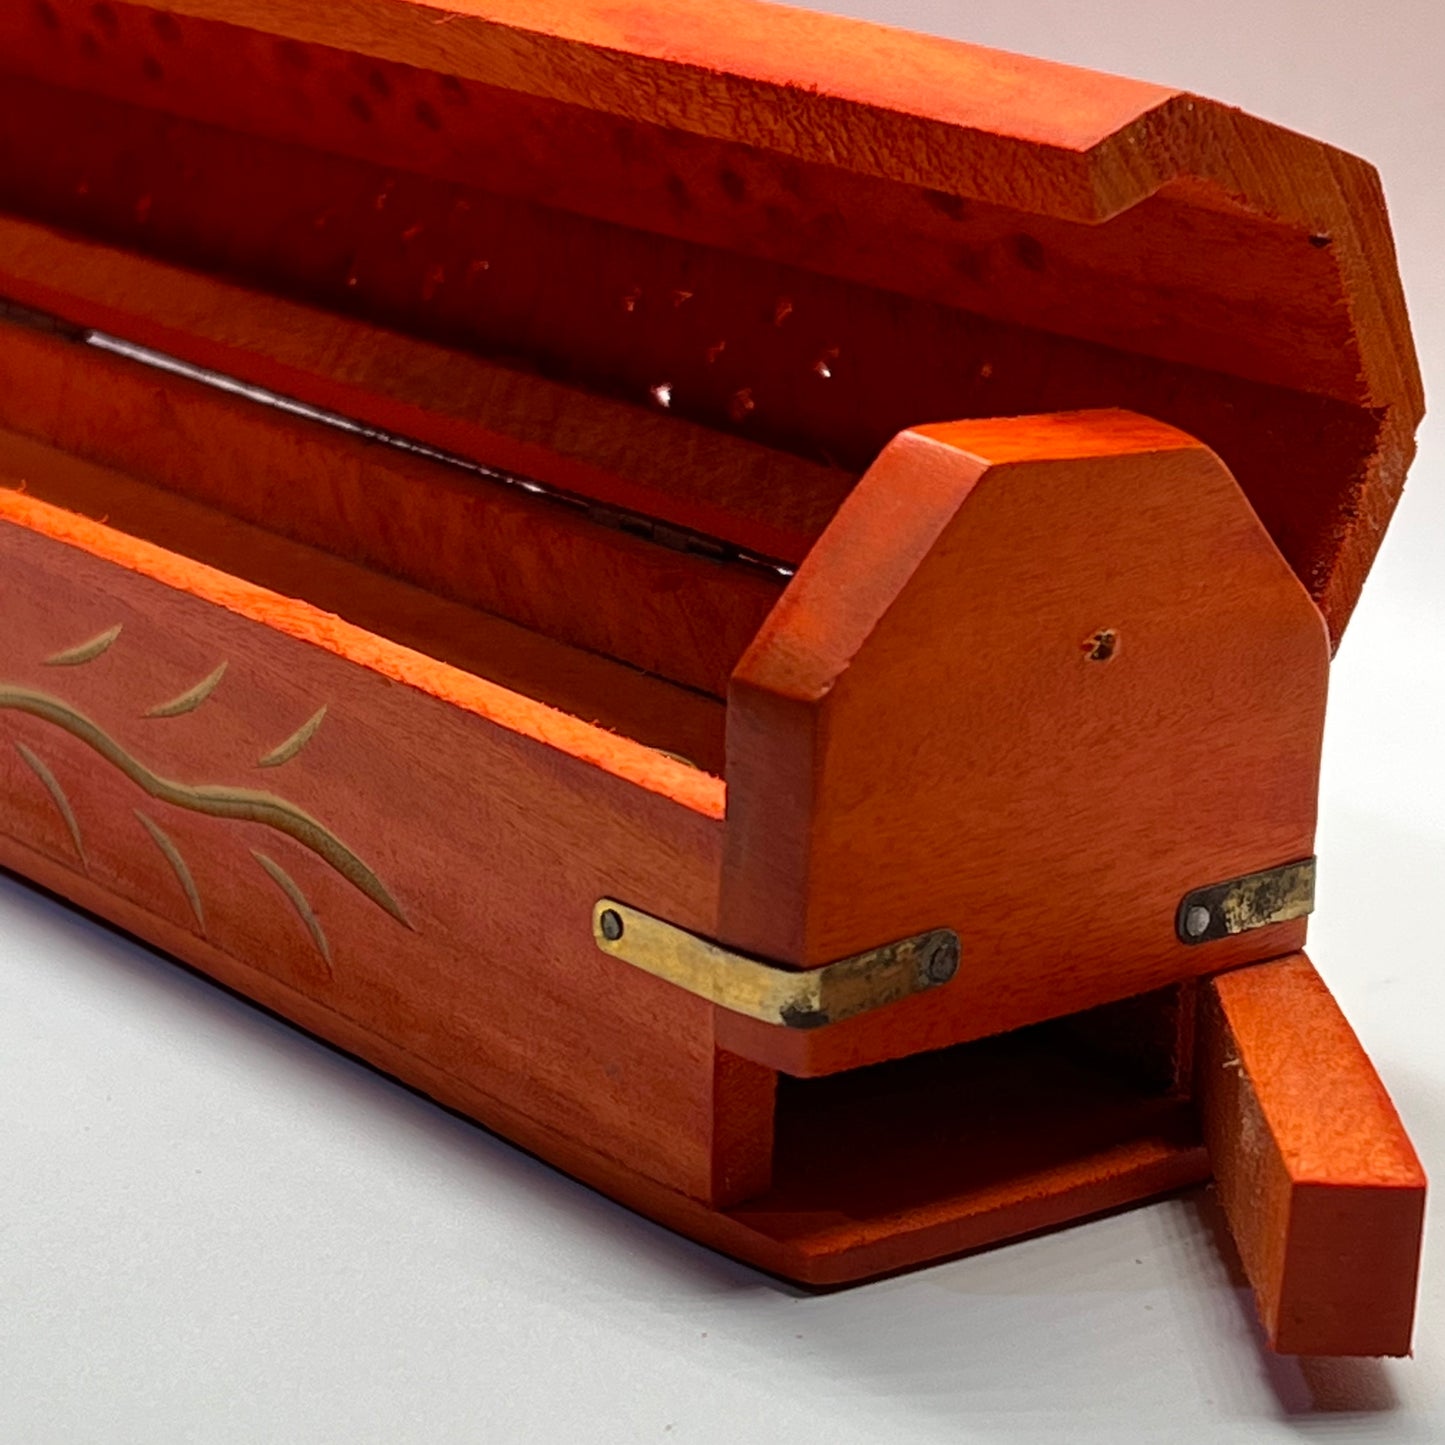 Wooden Incense Box - Orange